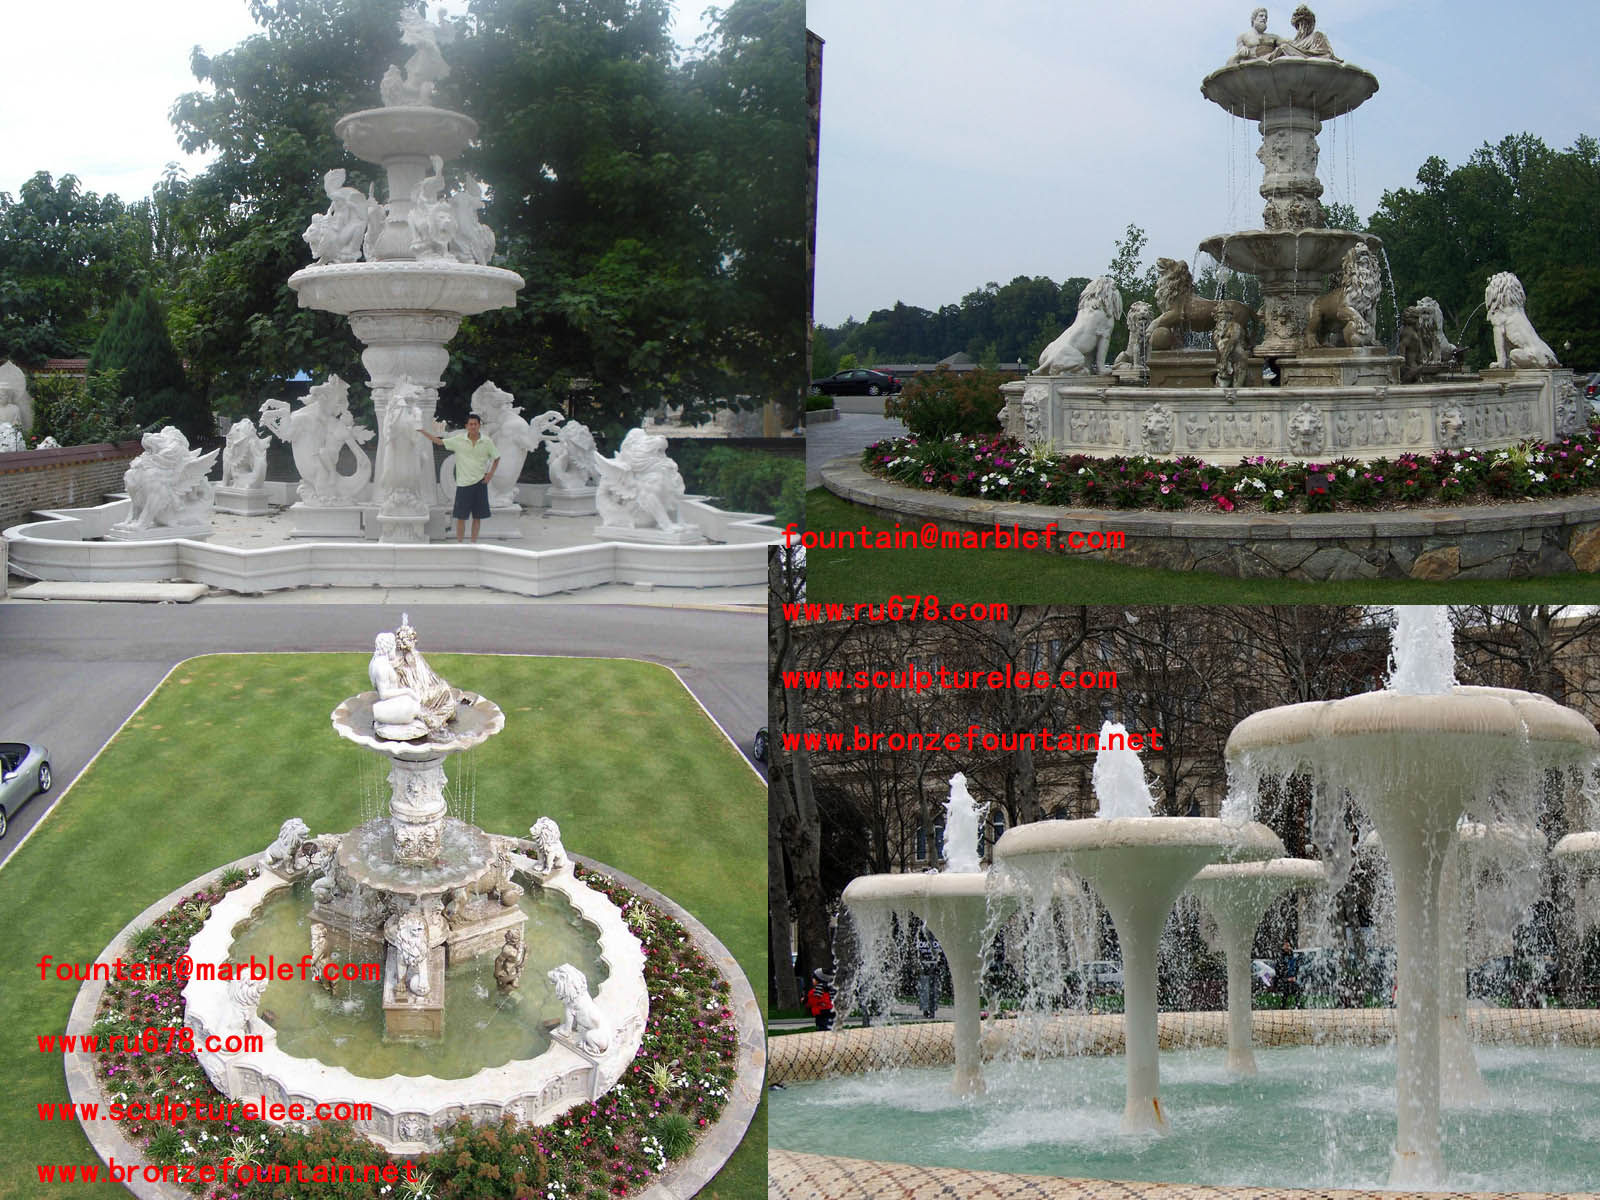 bronze tier fountain,bronze figures fountains,bronze sculpture fountains